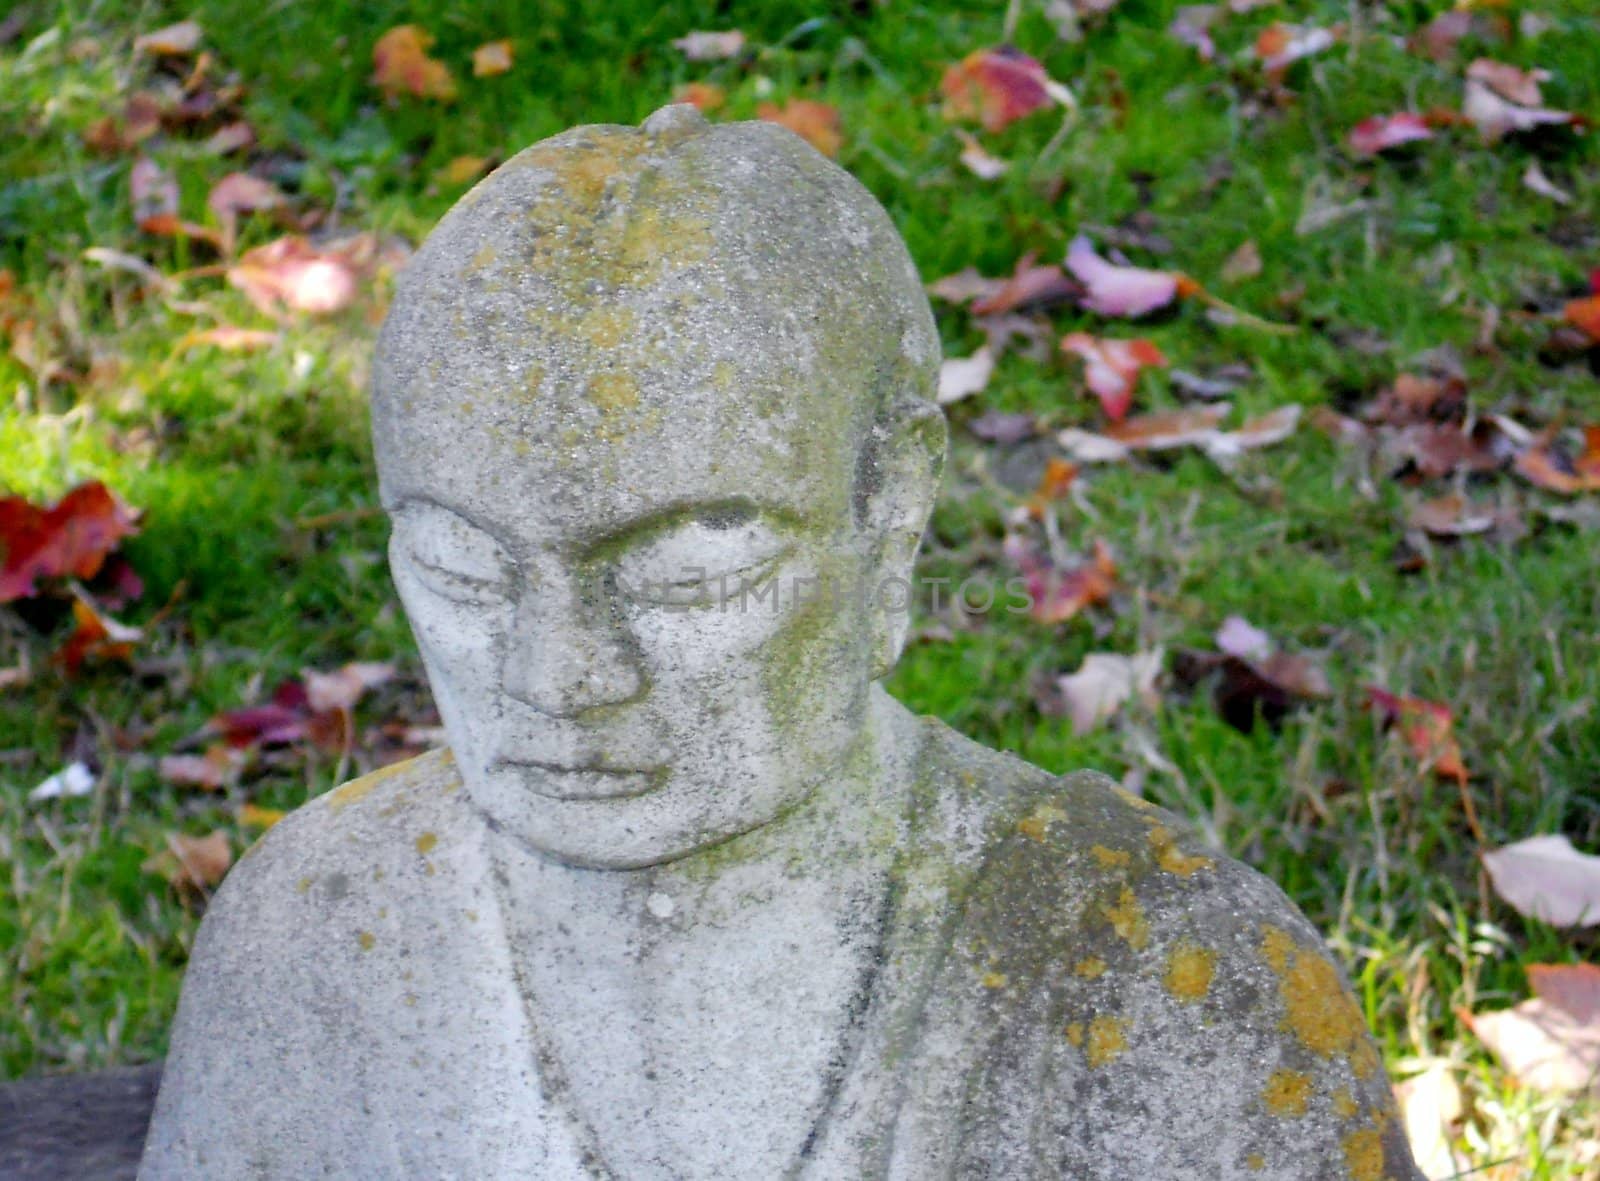 Mossy Buddha by xplorer1959@hotmail.com